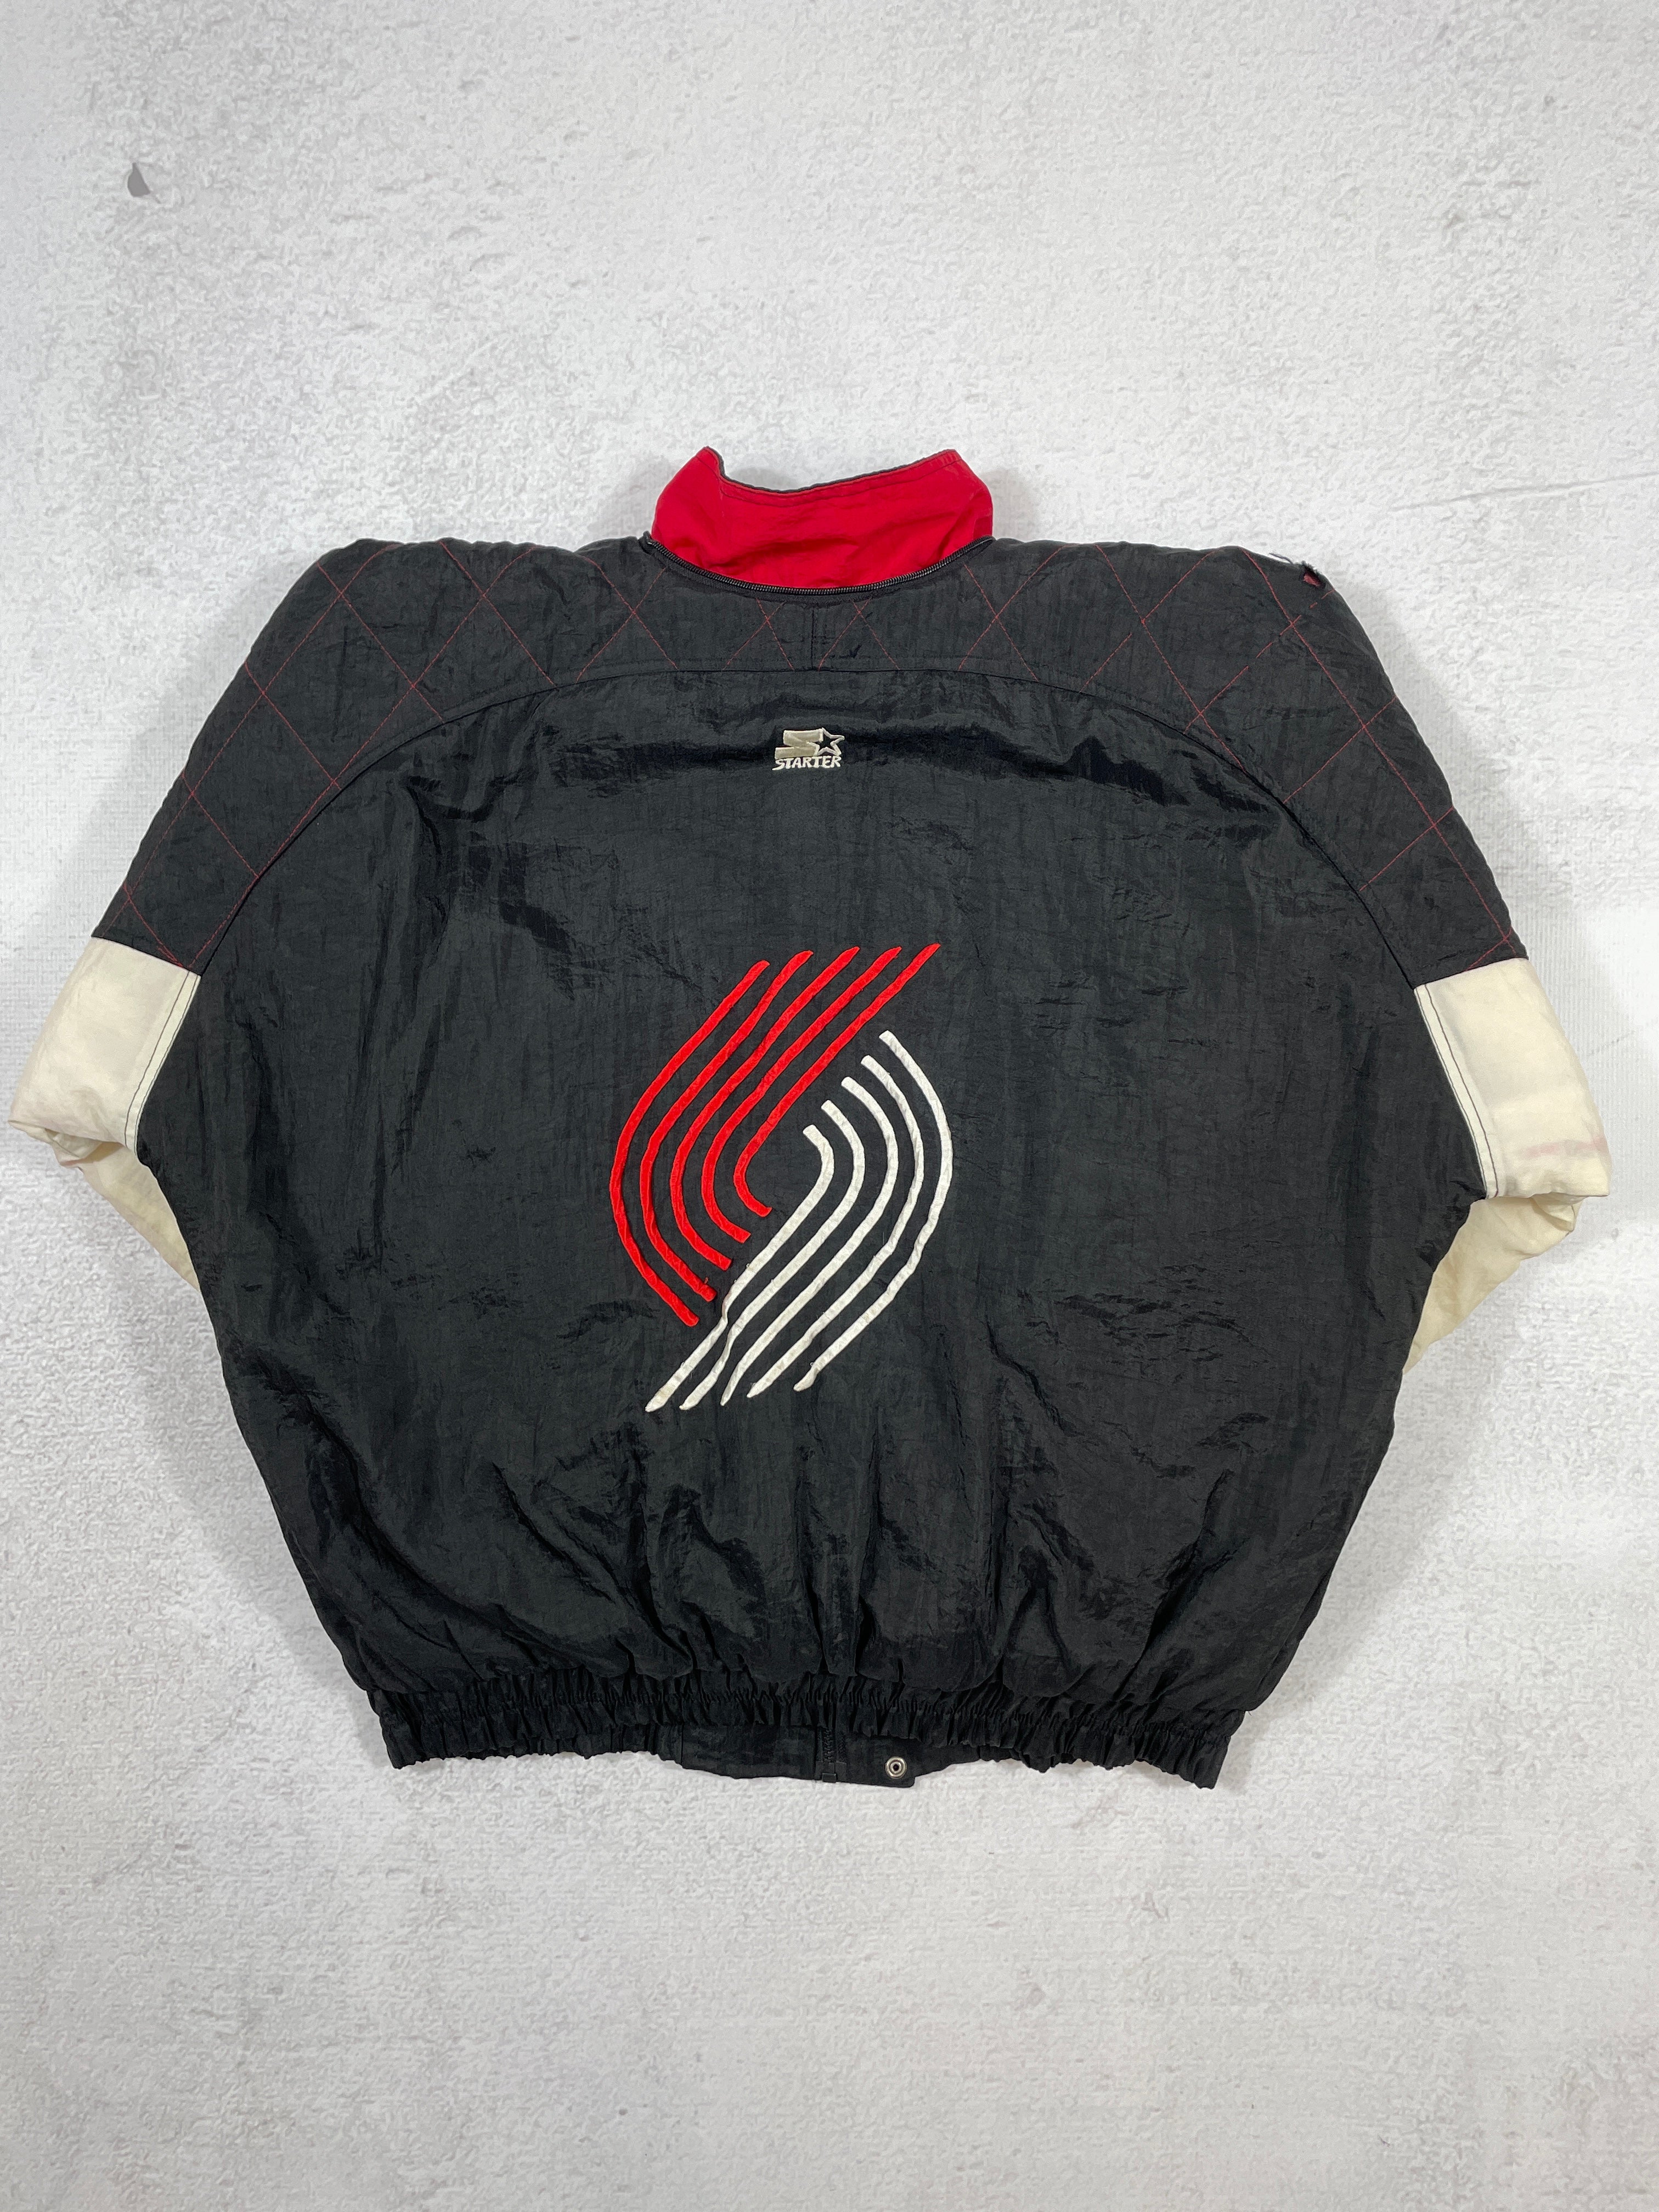 Vintage Starter NBA Portland Trailblazers Insulated Jacket - Men's XL